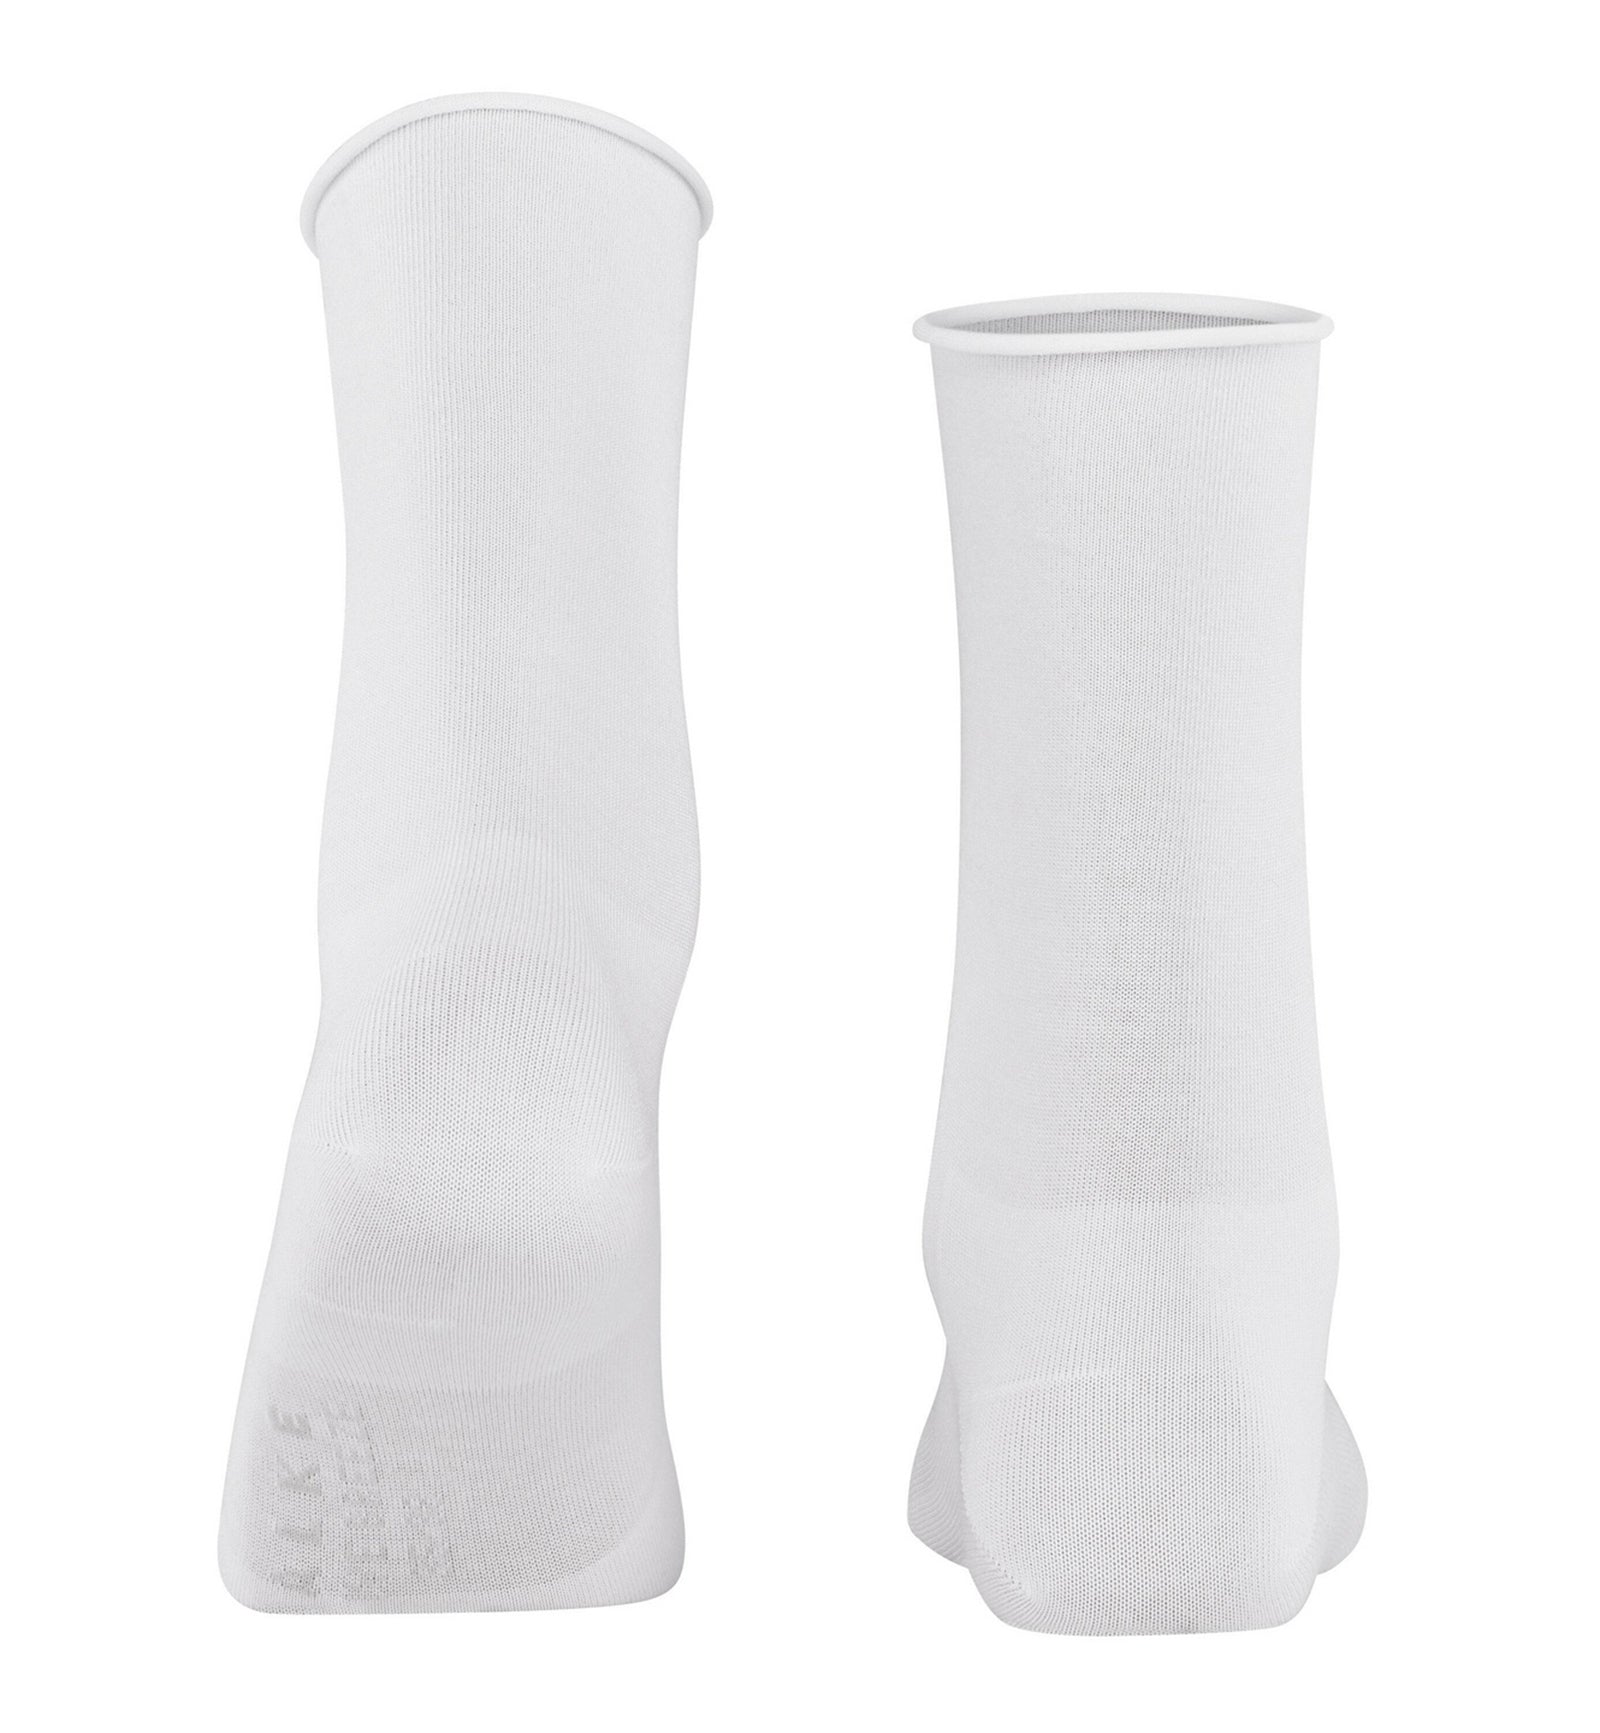 FALKE Active Breeze Crew Socks (46189),5/7.5,White - White,5/7.5